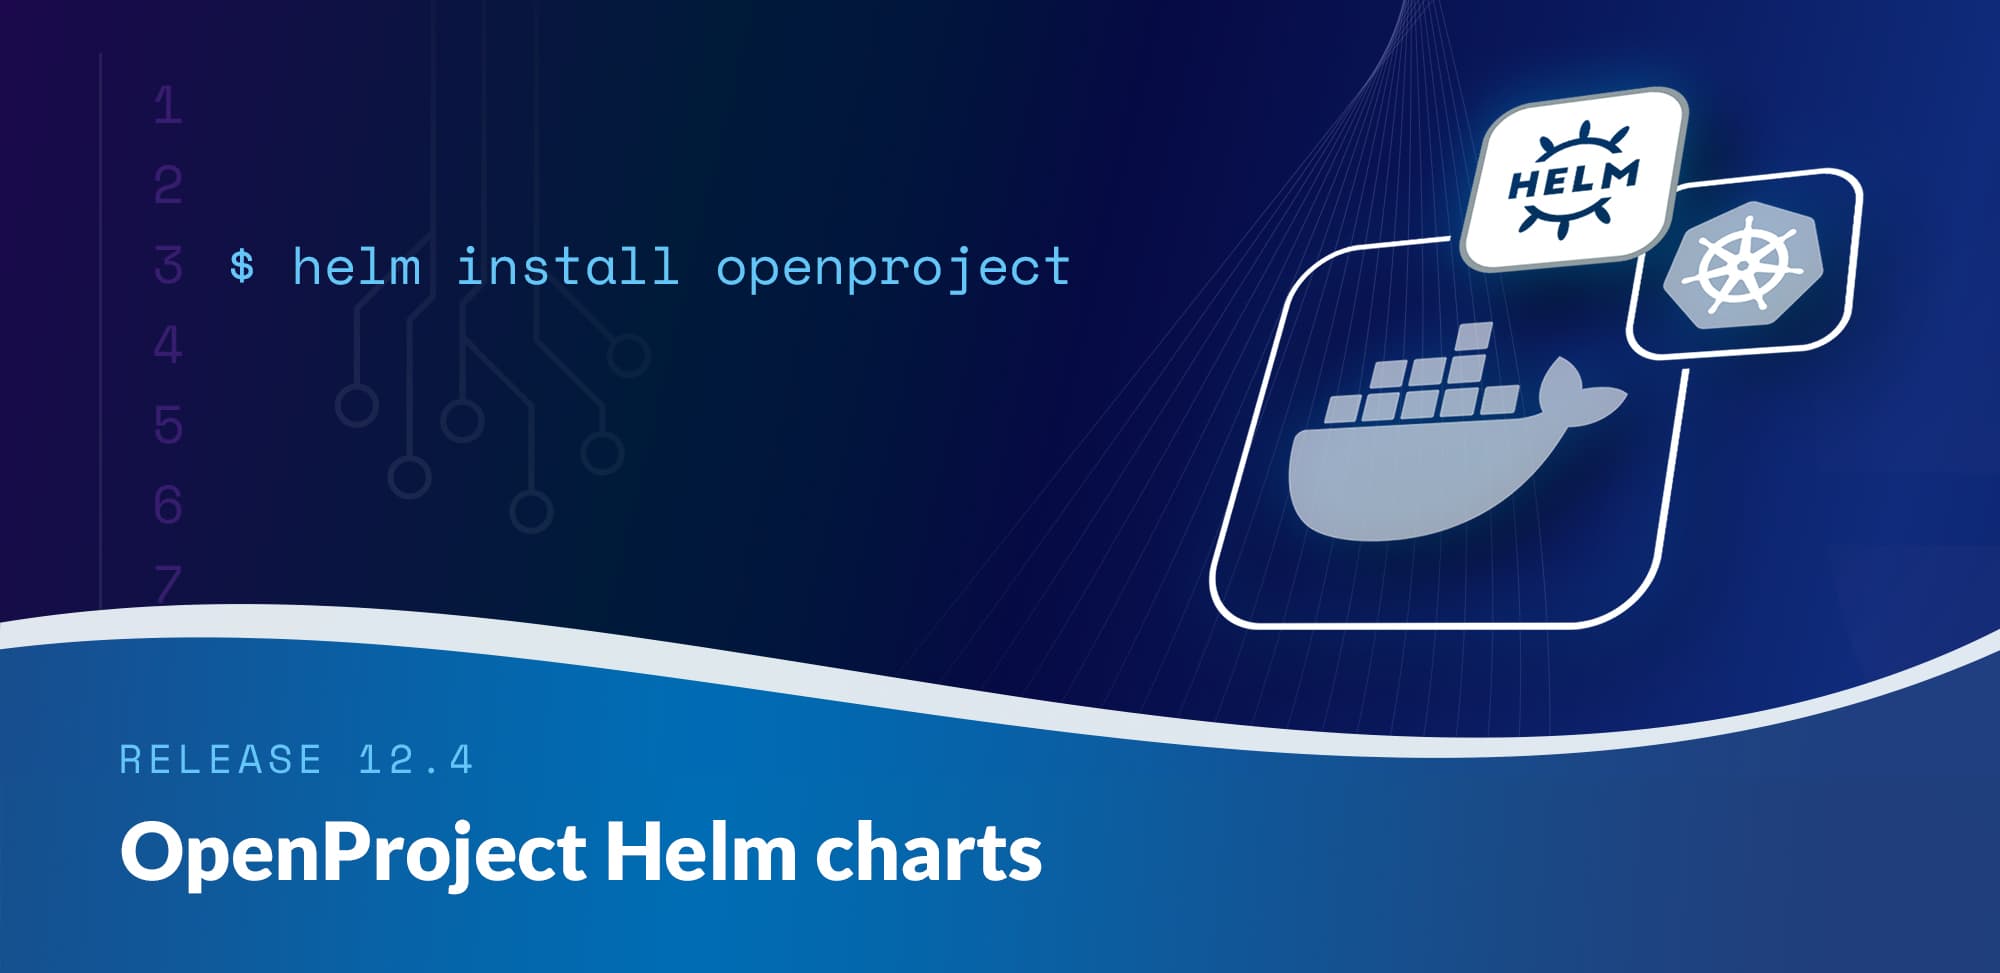 openproject helm charts